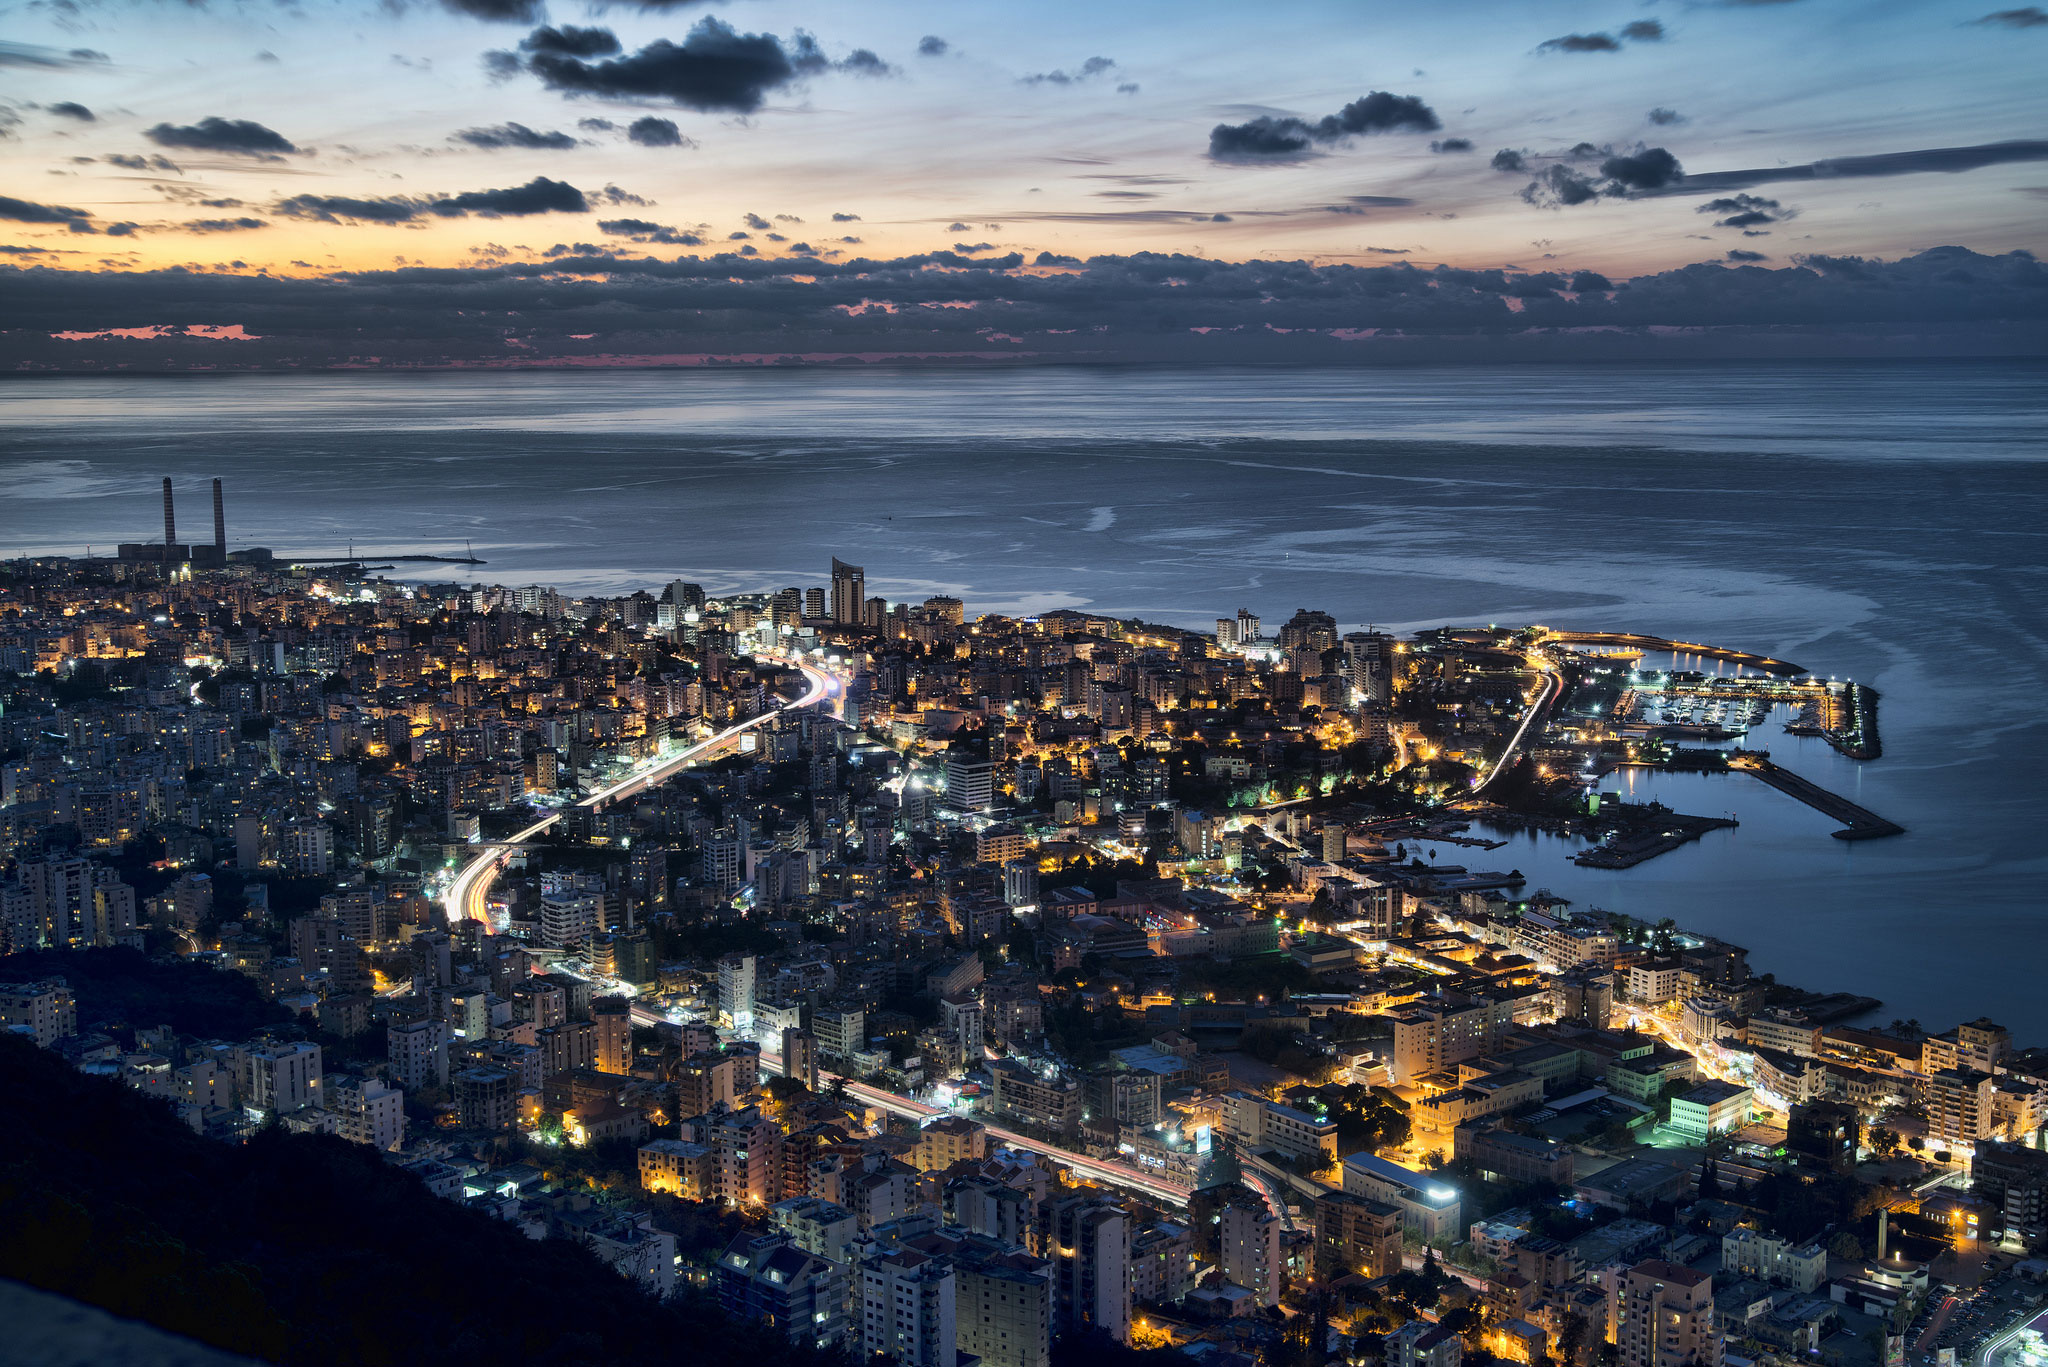 Blick über Beirut, die Hauptstadt des Libanon. Foto: Ahmad Moussaoui (CC BY 2.0) https://creativecommons.org/licenses/by/2.0/ https://www.flickr.com/photos/ahmadmoussaoui/8278992944/